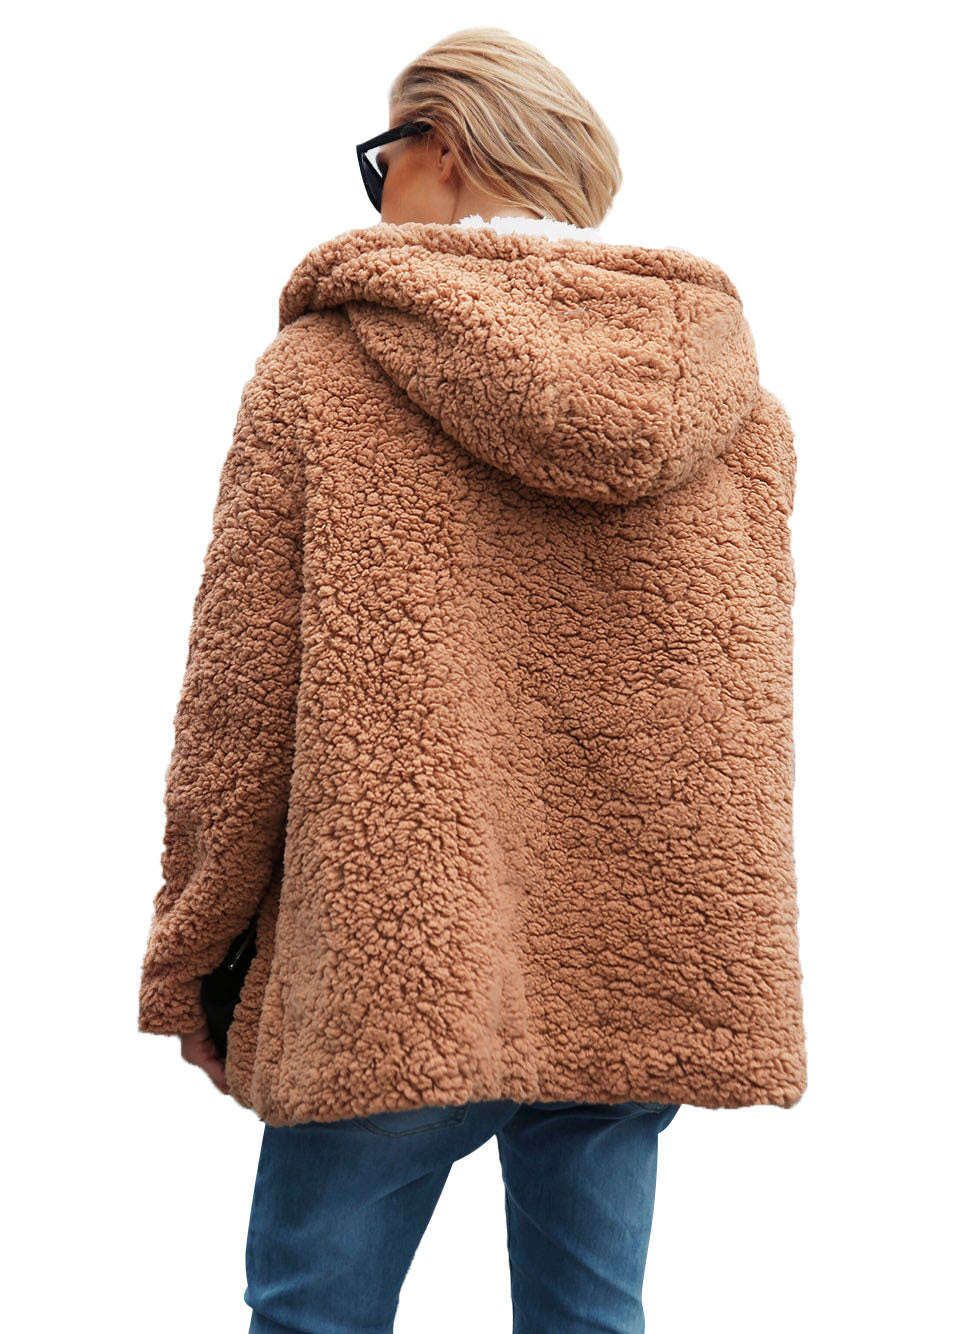 Fleece Sweater With Zipper To Keep Warm